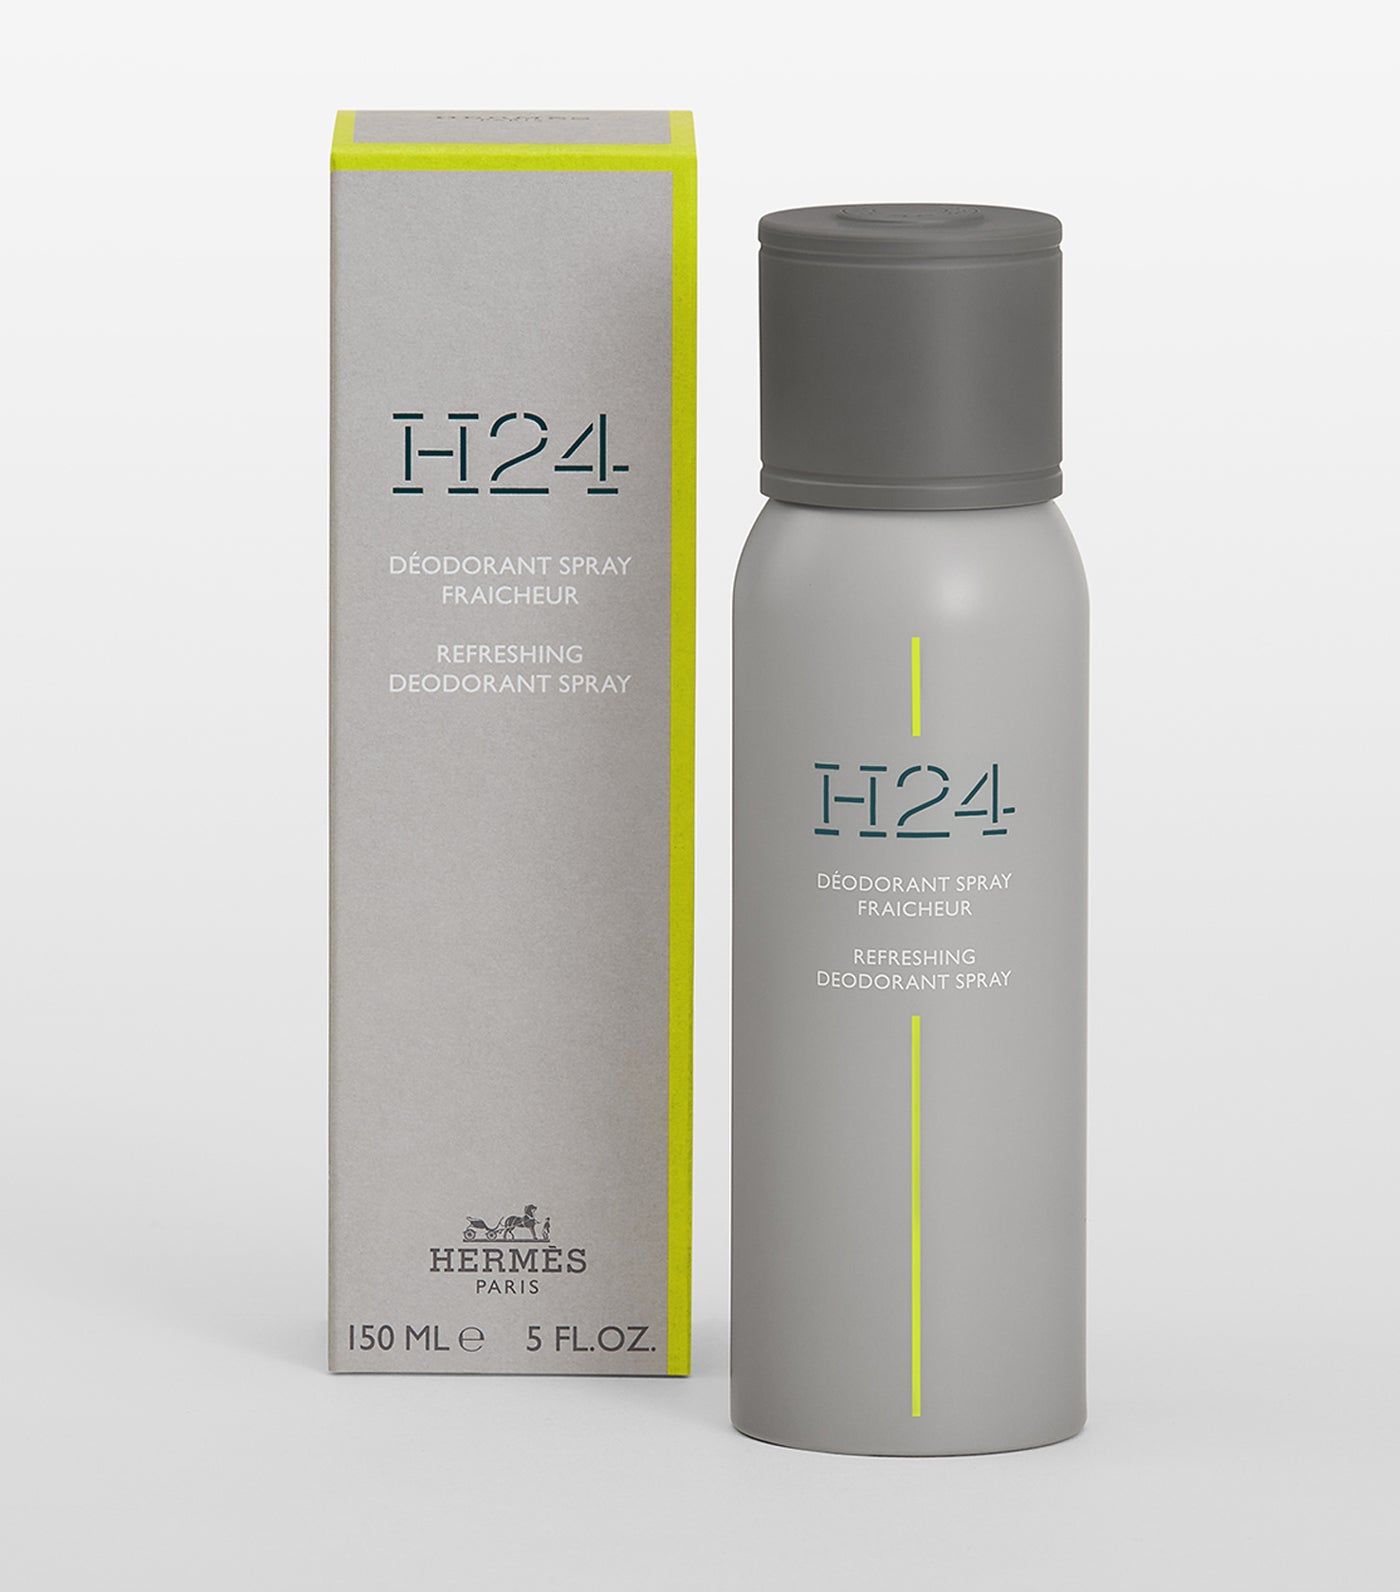 H24, refreshing spray deodorant 150ml